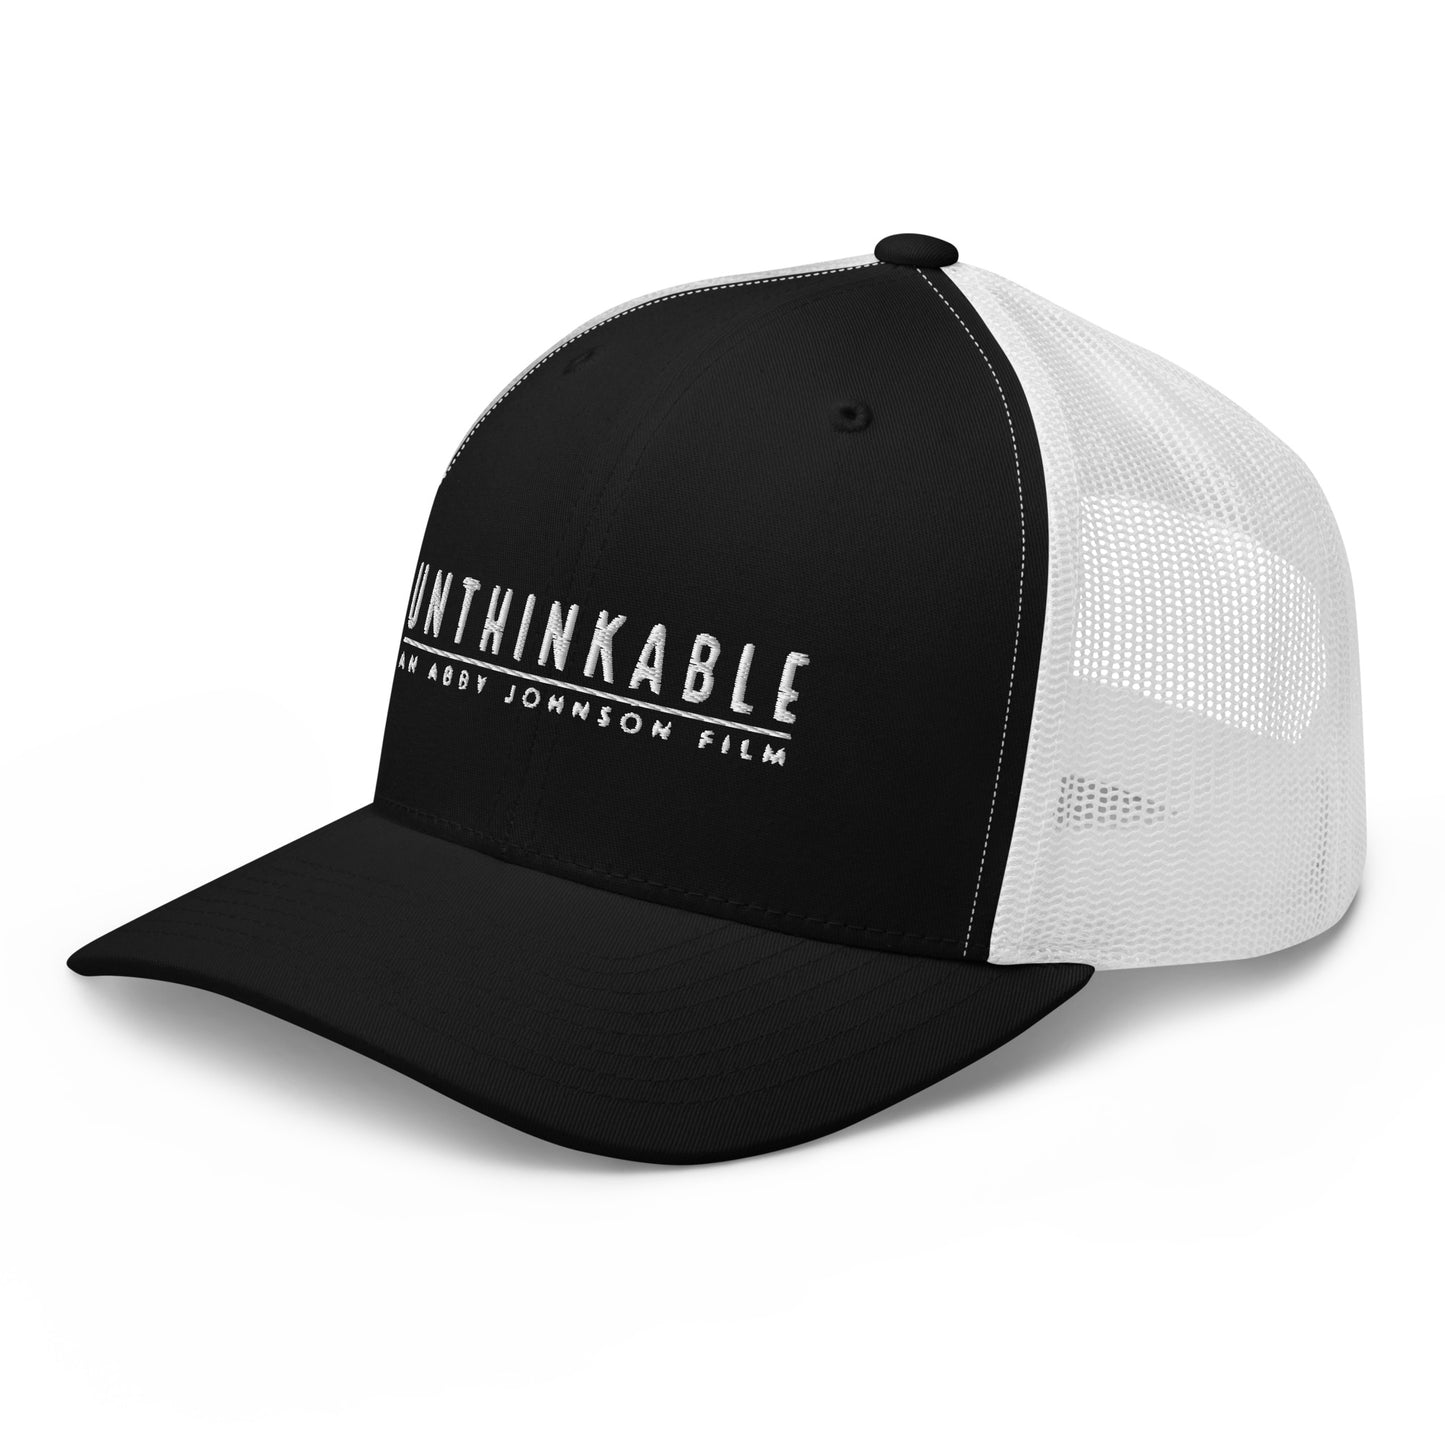 Unthinkable - Official Merchandise - Trucker Cap